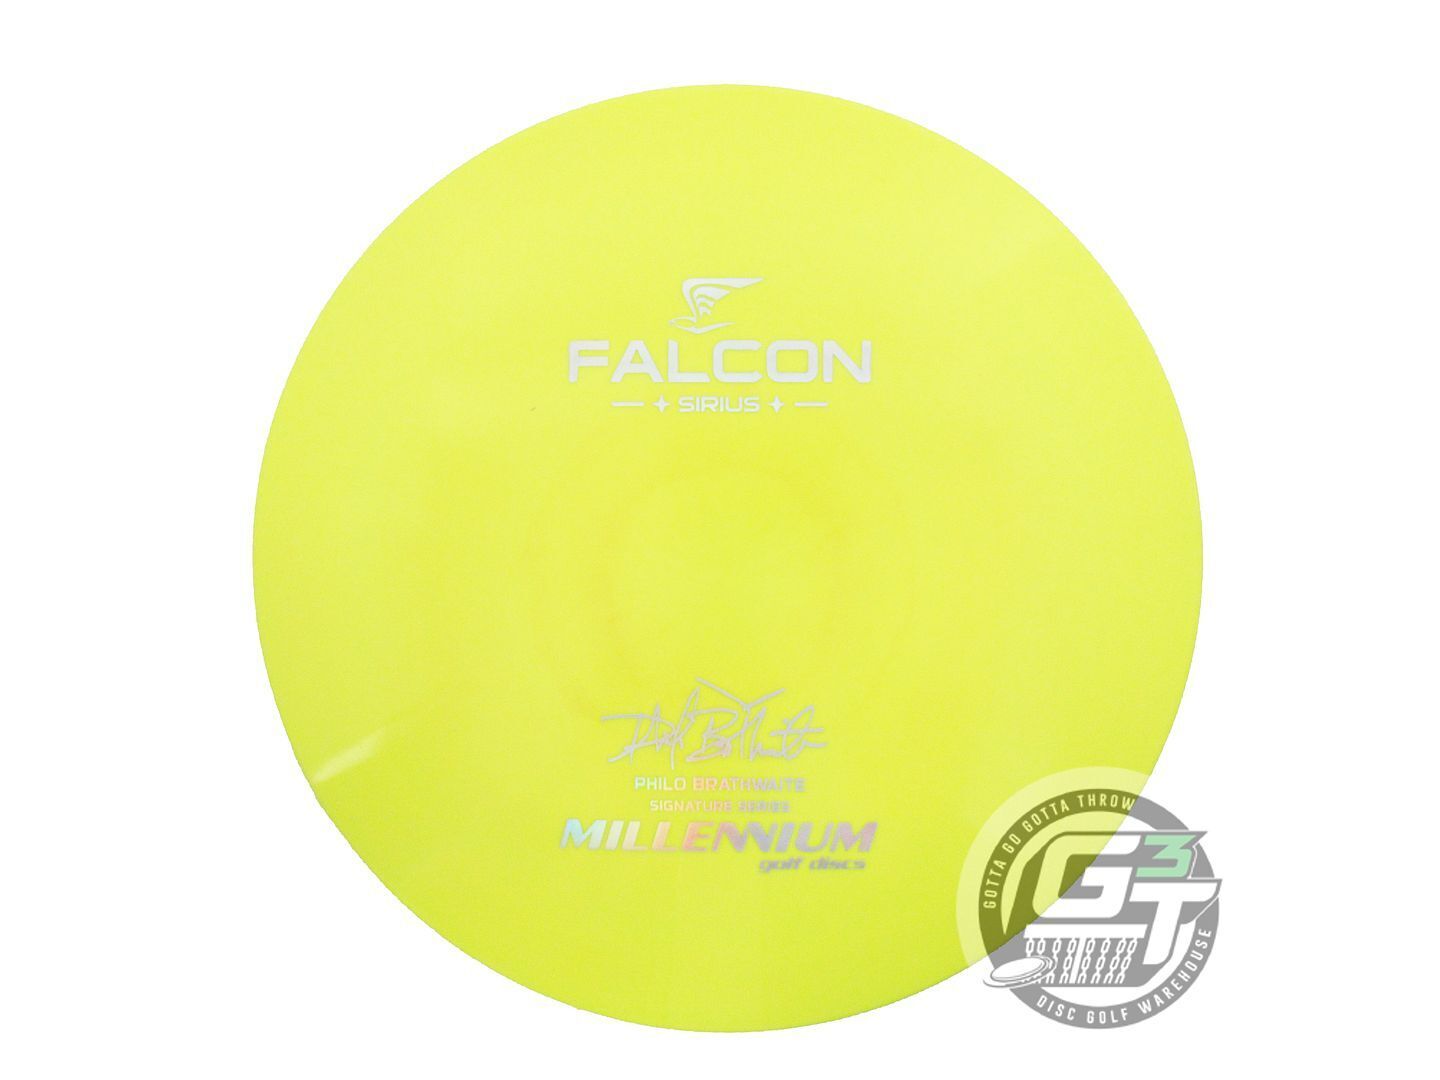 Millennium Philo Brathwaite Signature Sirius Falcon Distance Driver Golf Disc (Individually Listed)